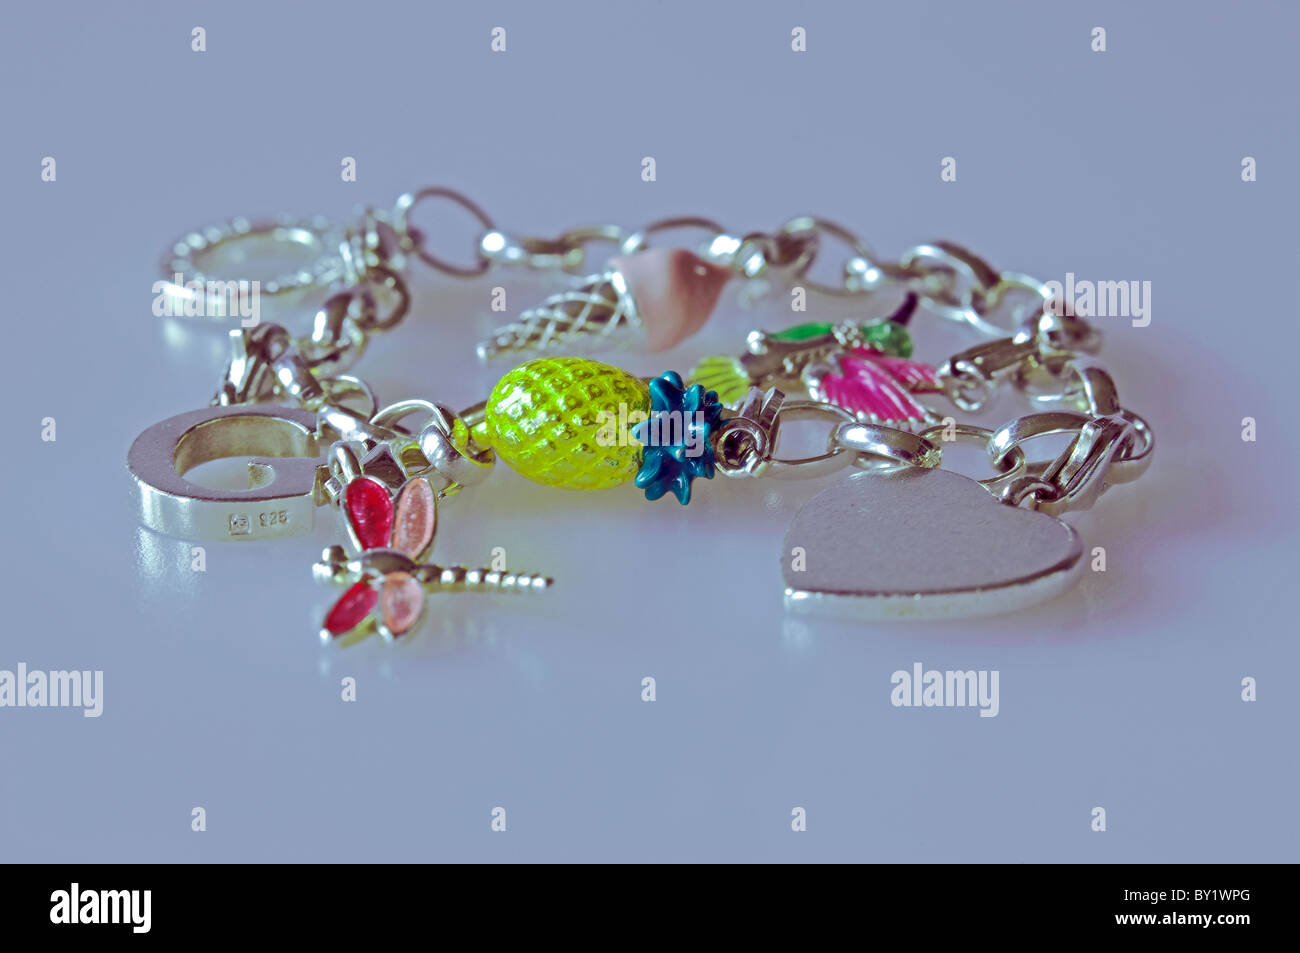 Thomas Sabo Charm Armband Stockfotografie - Alamy